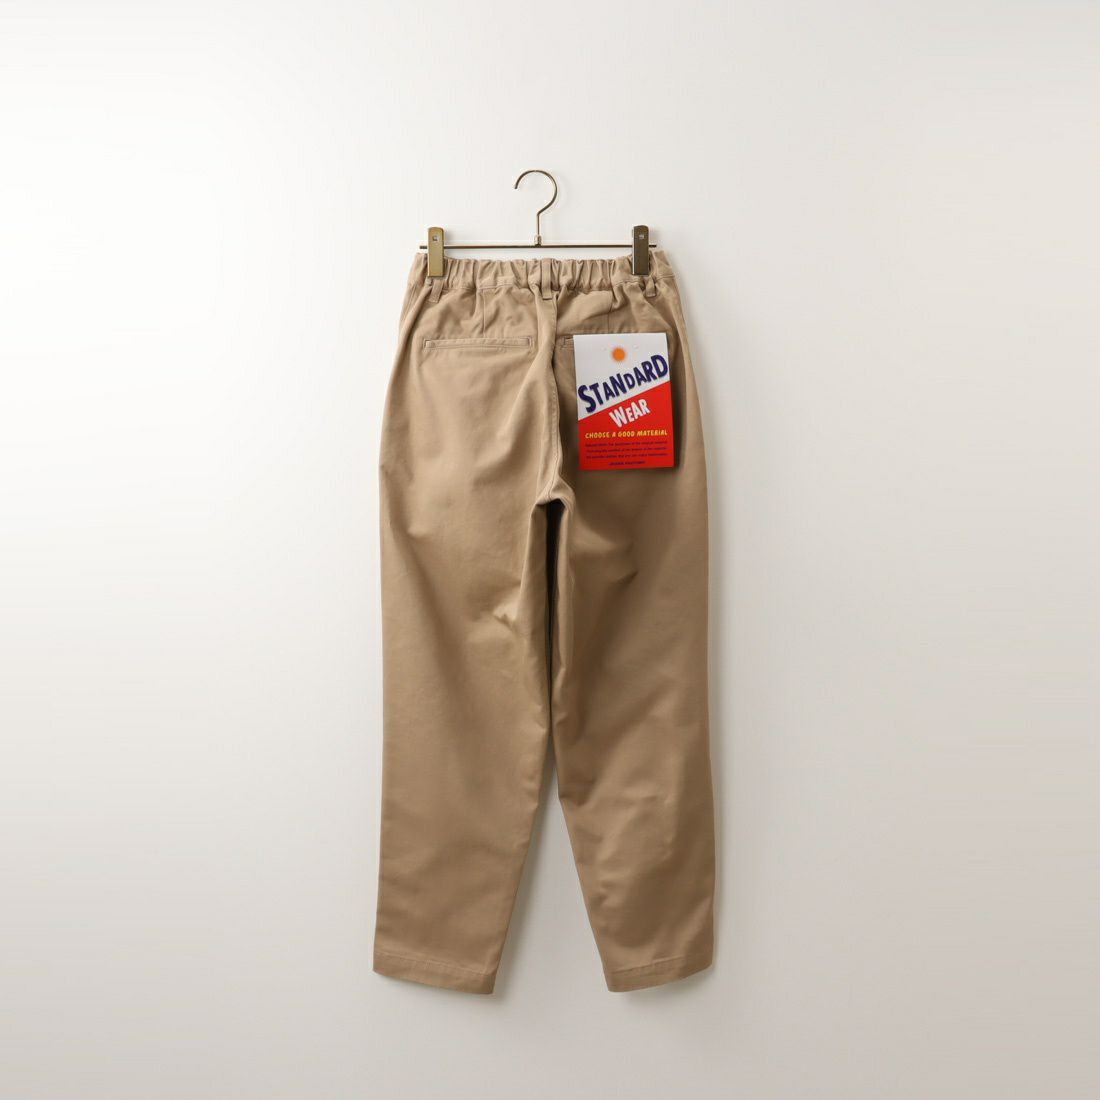 Jeans Factory Clothes [ジーンズファクトリークローズ] ワイドチノテーパードトラウザー [JFC-231-027] 67 BEG